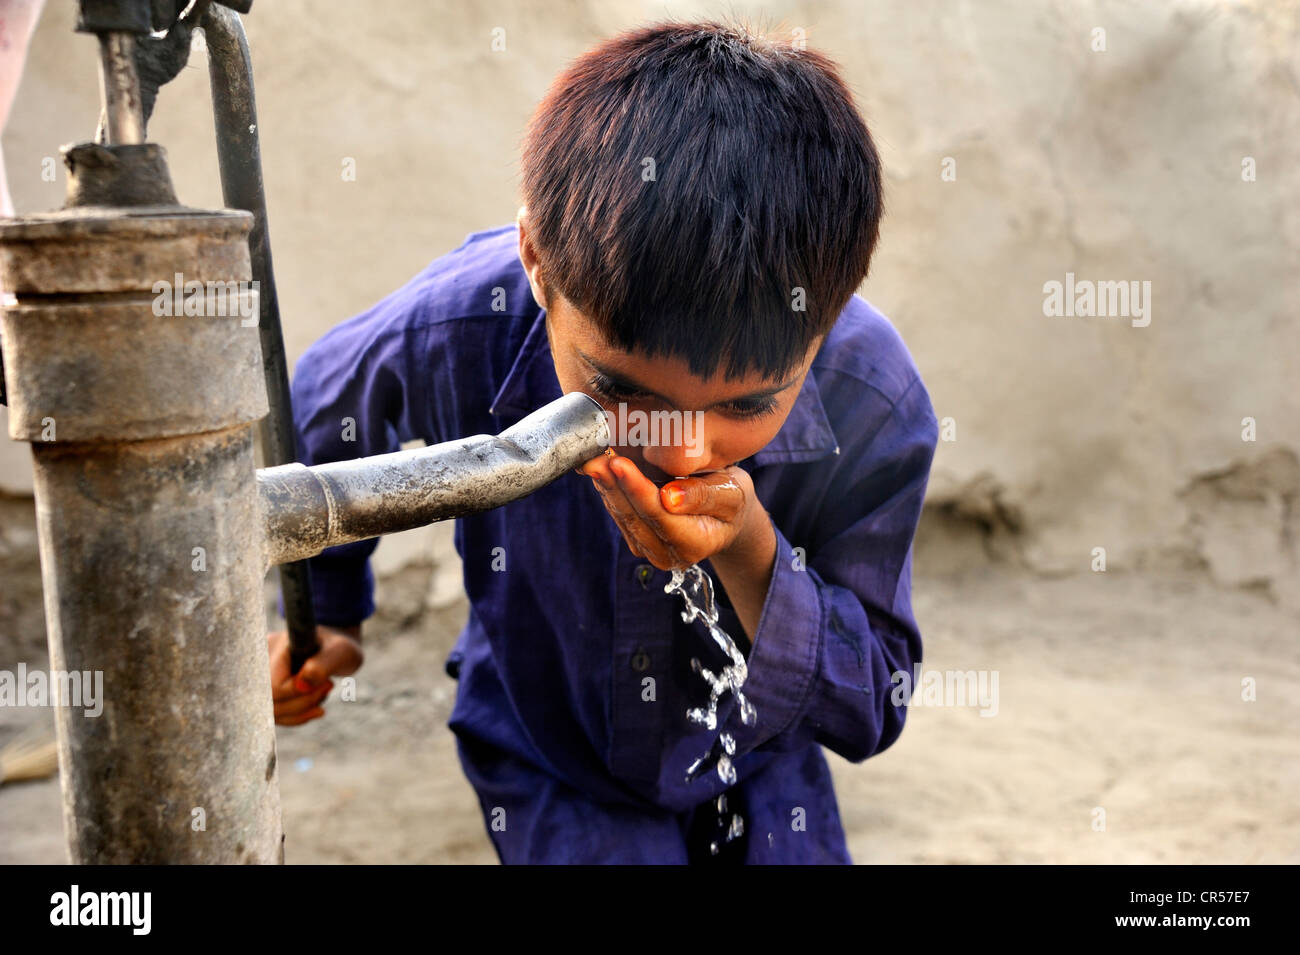 Boy drinking water from a well with a hand pump, village of Basti Lehar Walla, Punjab, Pakistan, Asia Stock Photo